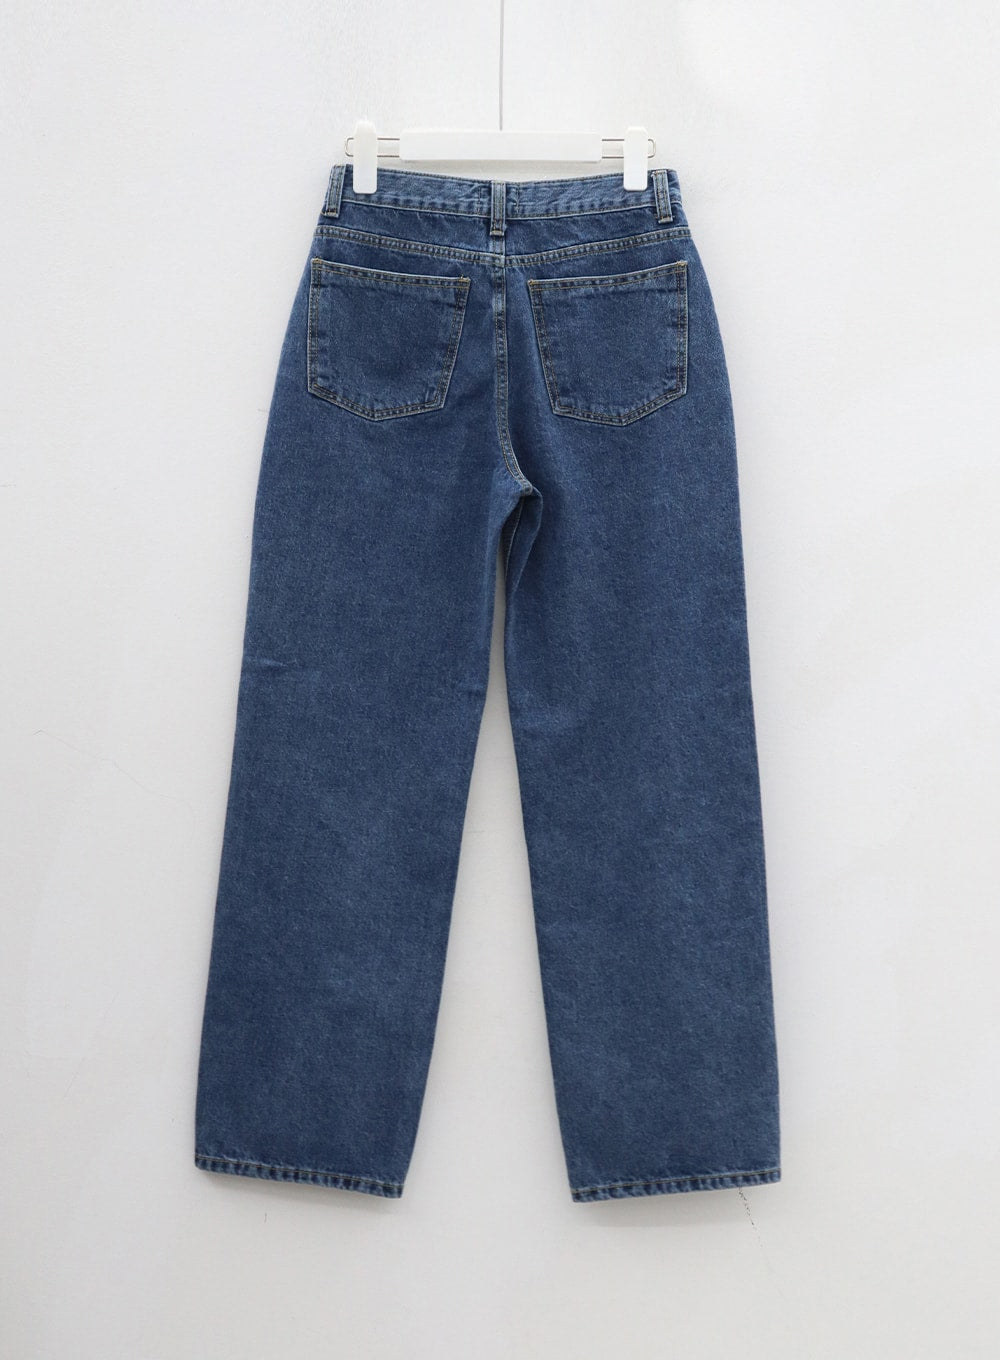 Heart Front Pocket Wide Jeans BJ302